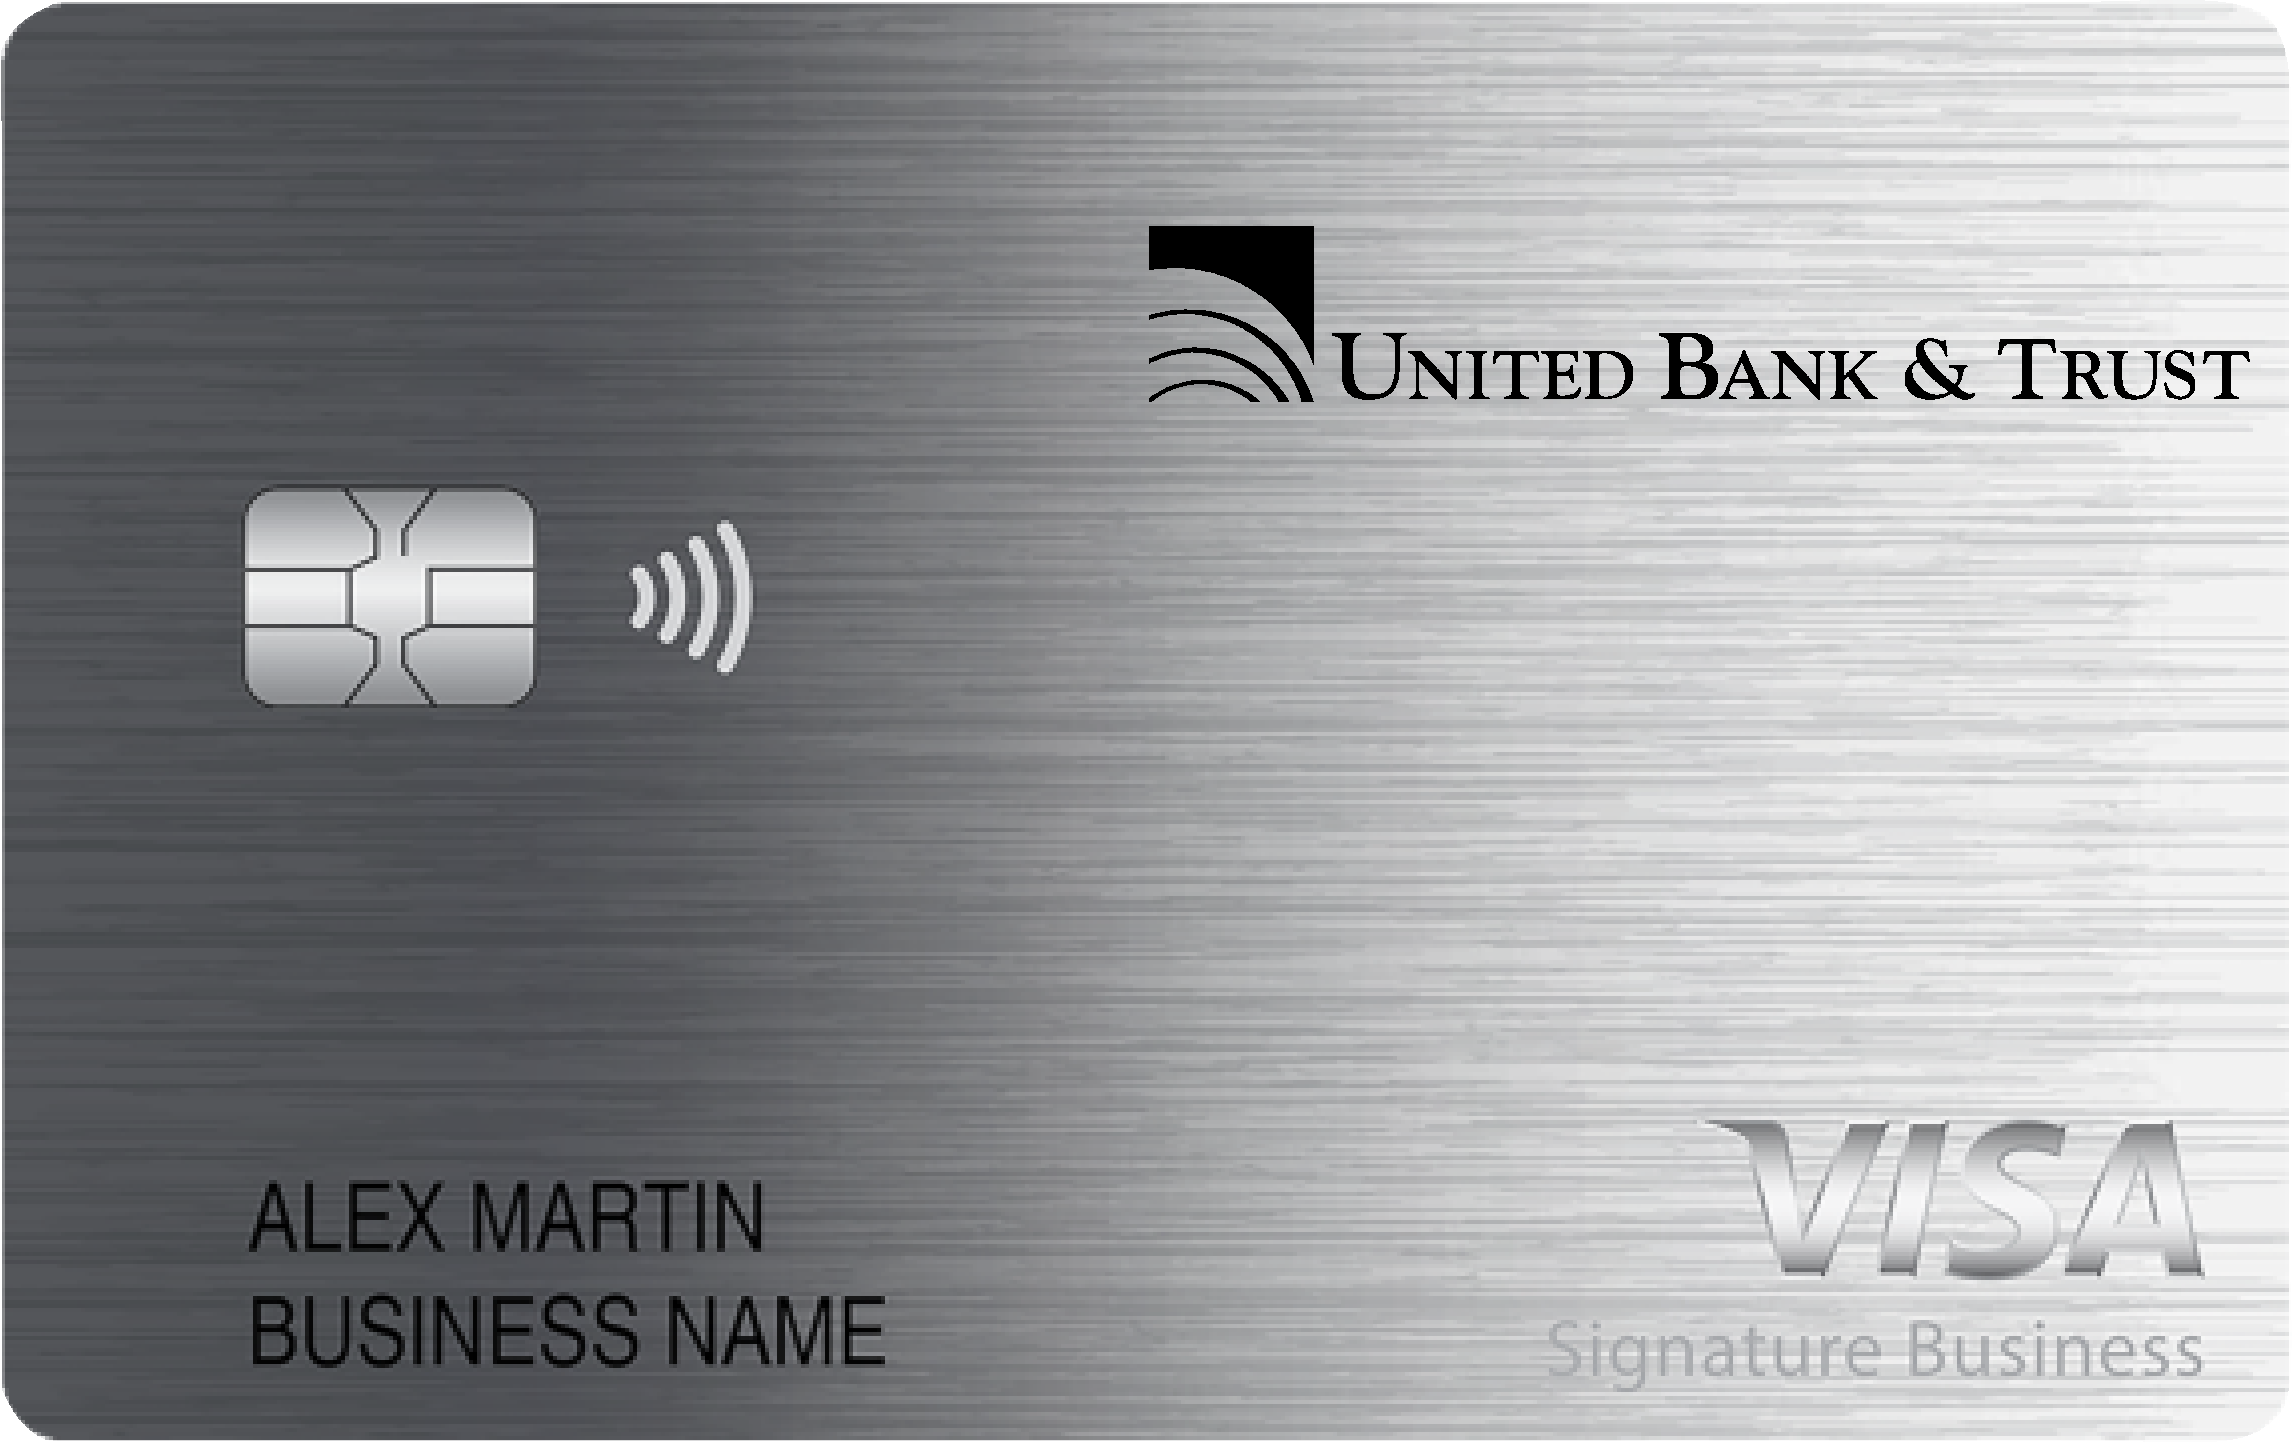 United Bank & Trust Smart Business Rewards Card